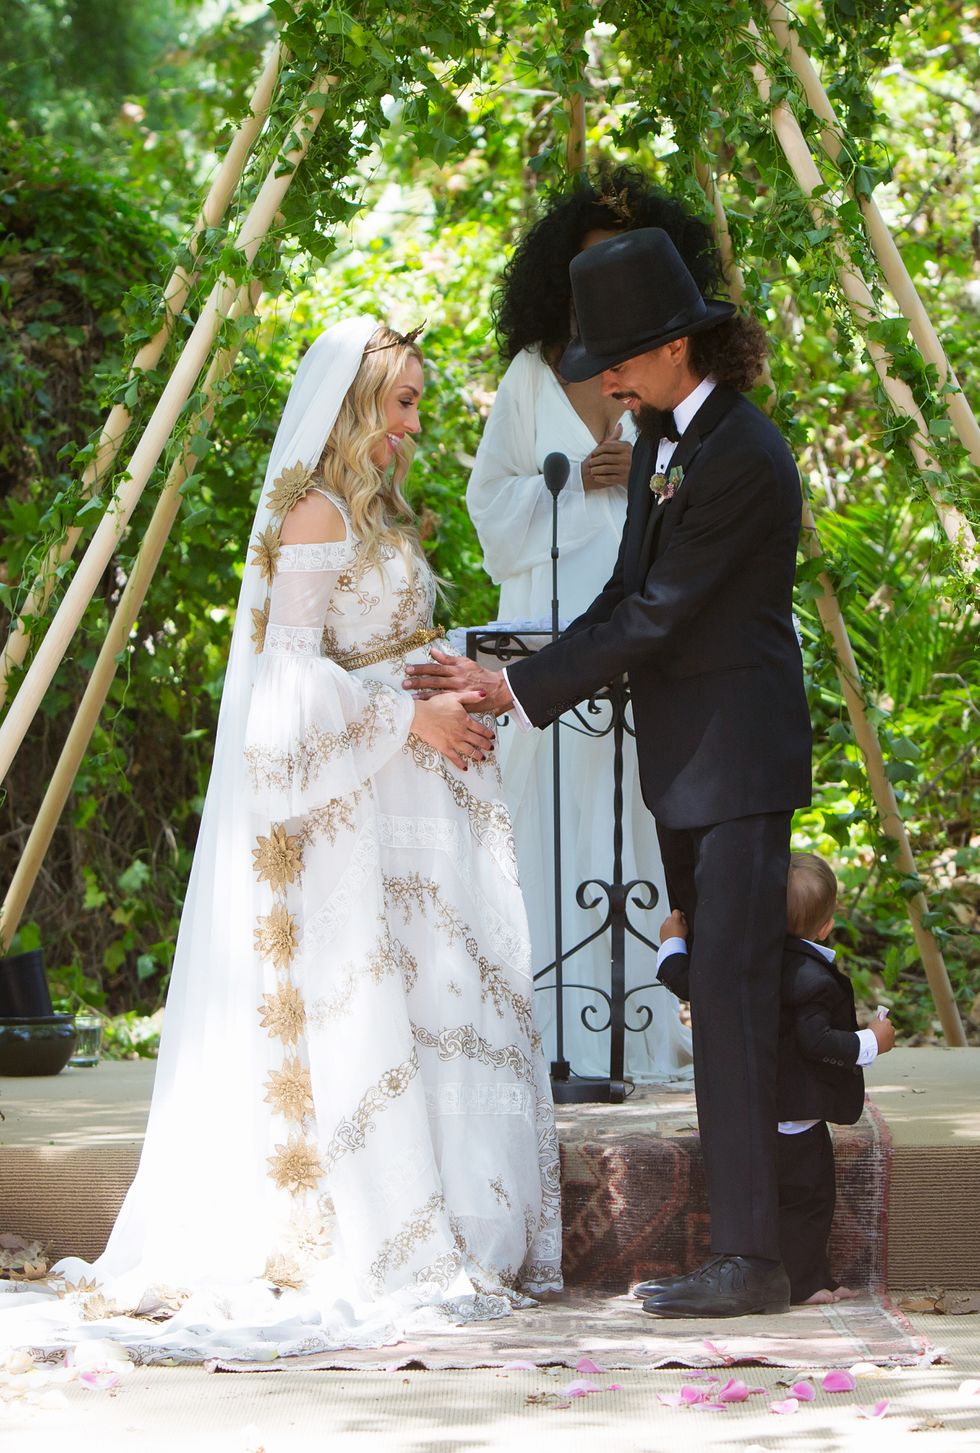 Laetitia Casta Married Actor Louis Garrel in Secret Wedding